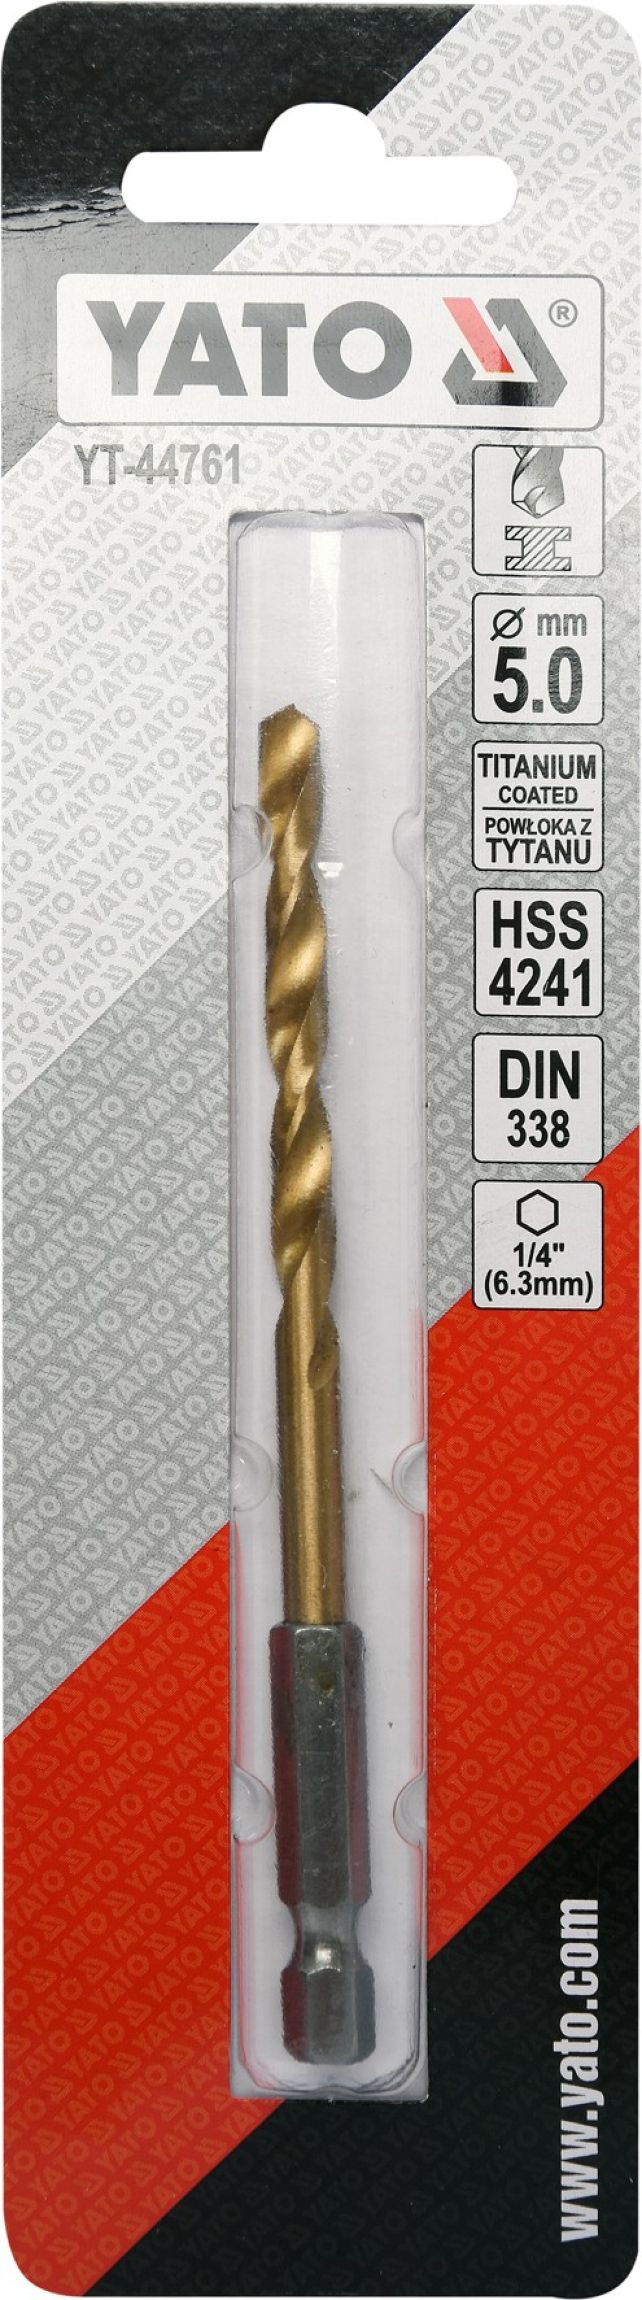 Vrtk do kovu HSS-titan 2,0mm se estihranou stopkou 1/4" Yato YT-44751